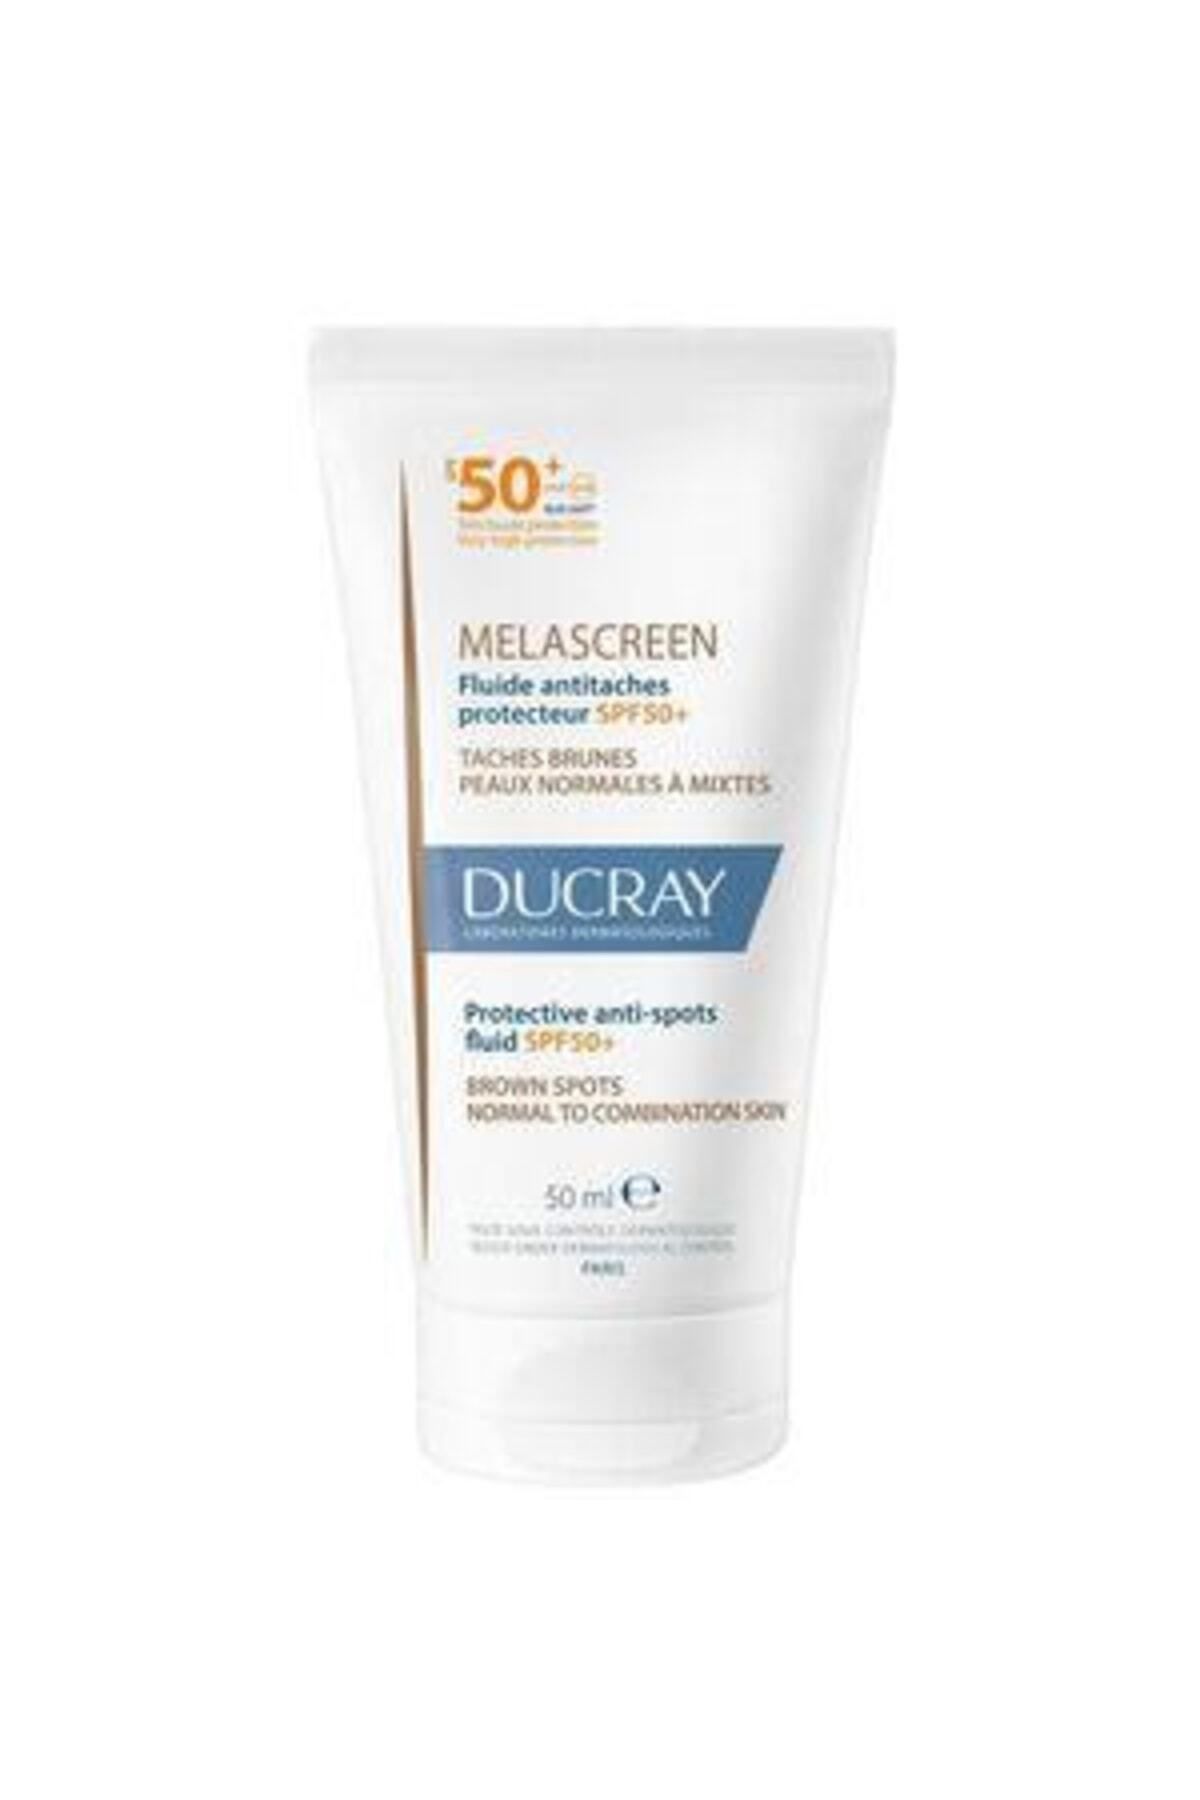 Ducray Melascreen Flude Protective Anti Spots Fluid Spf 50 50 ml